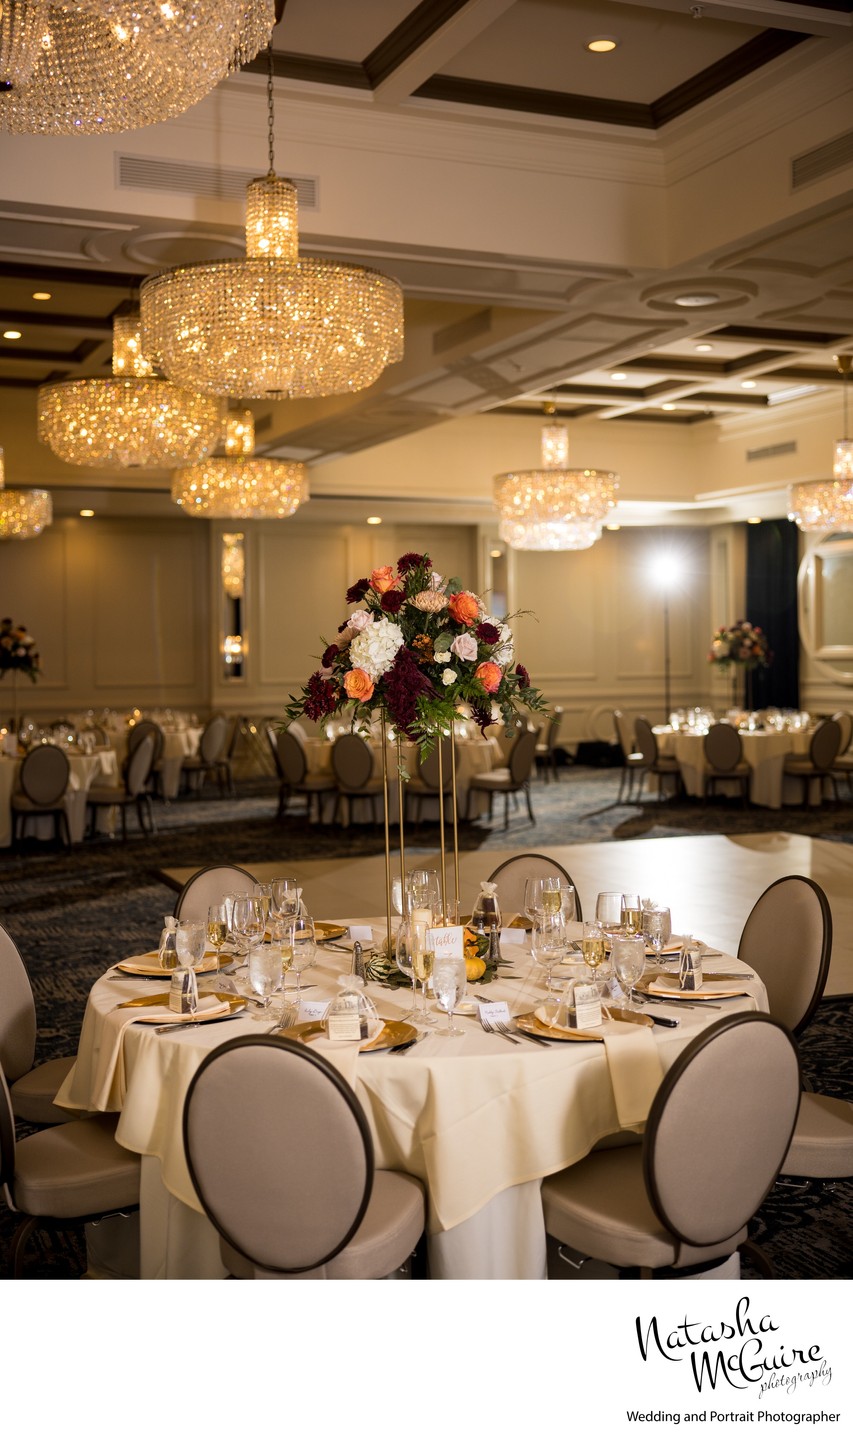 Hotel Saint Louis ballroom wedding reception decor